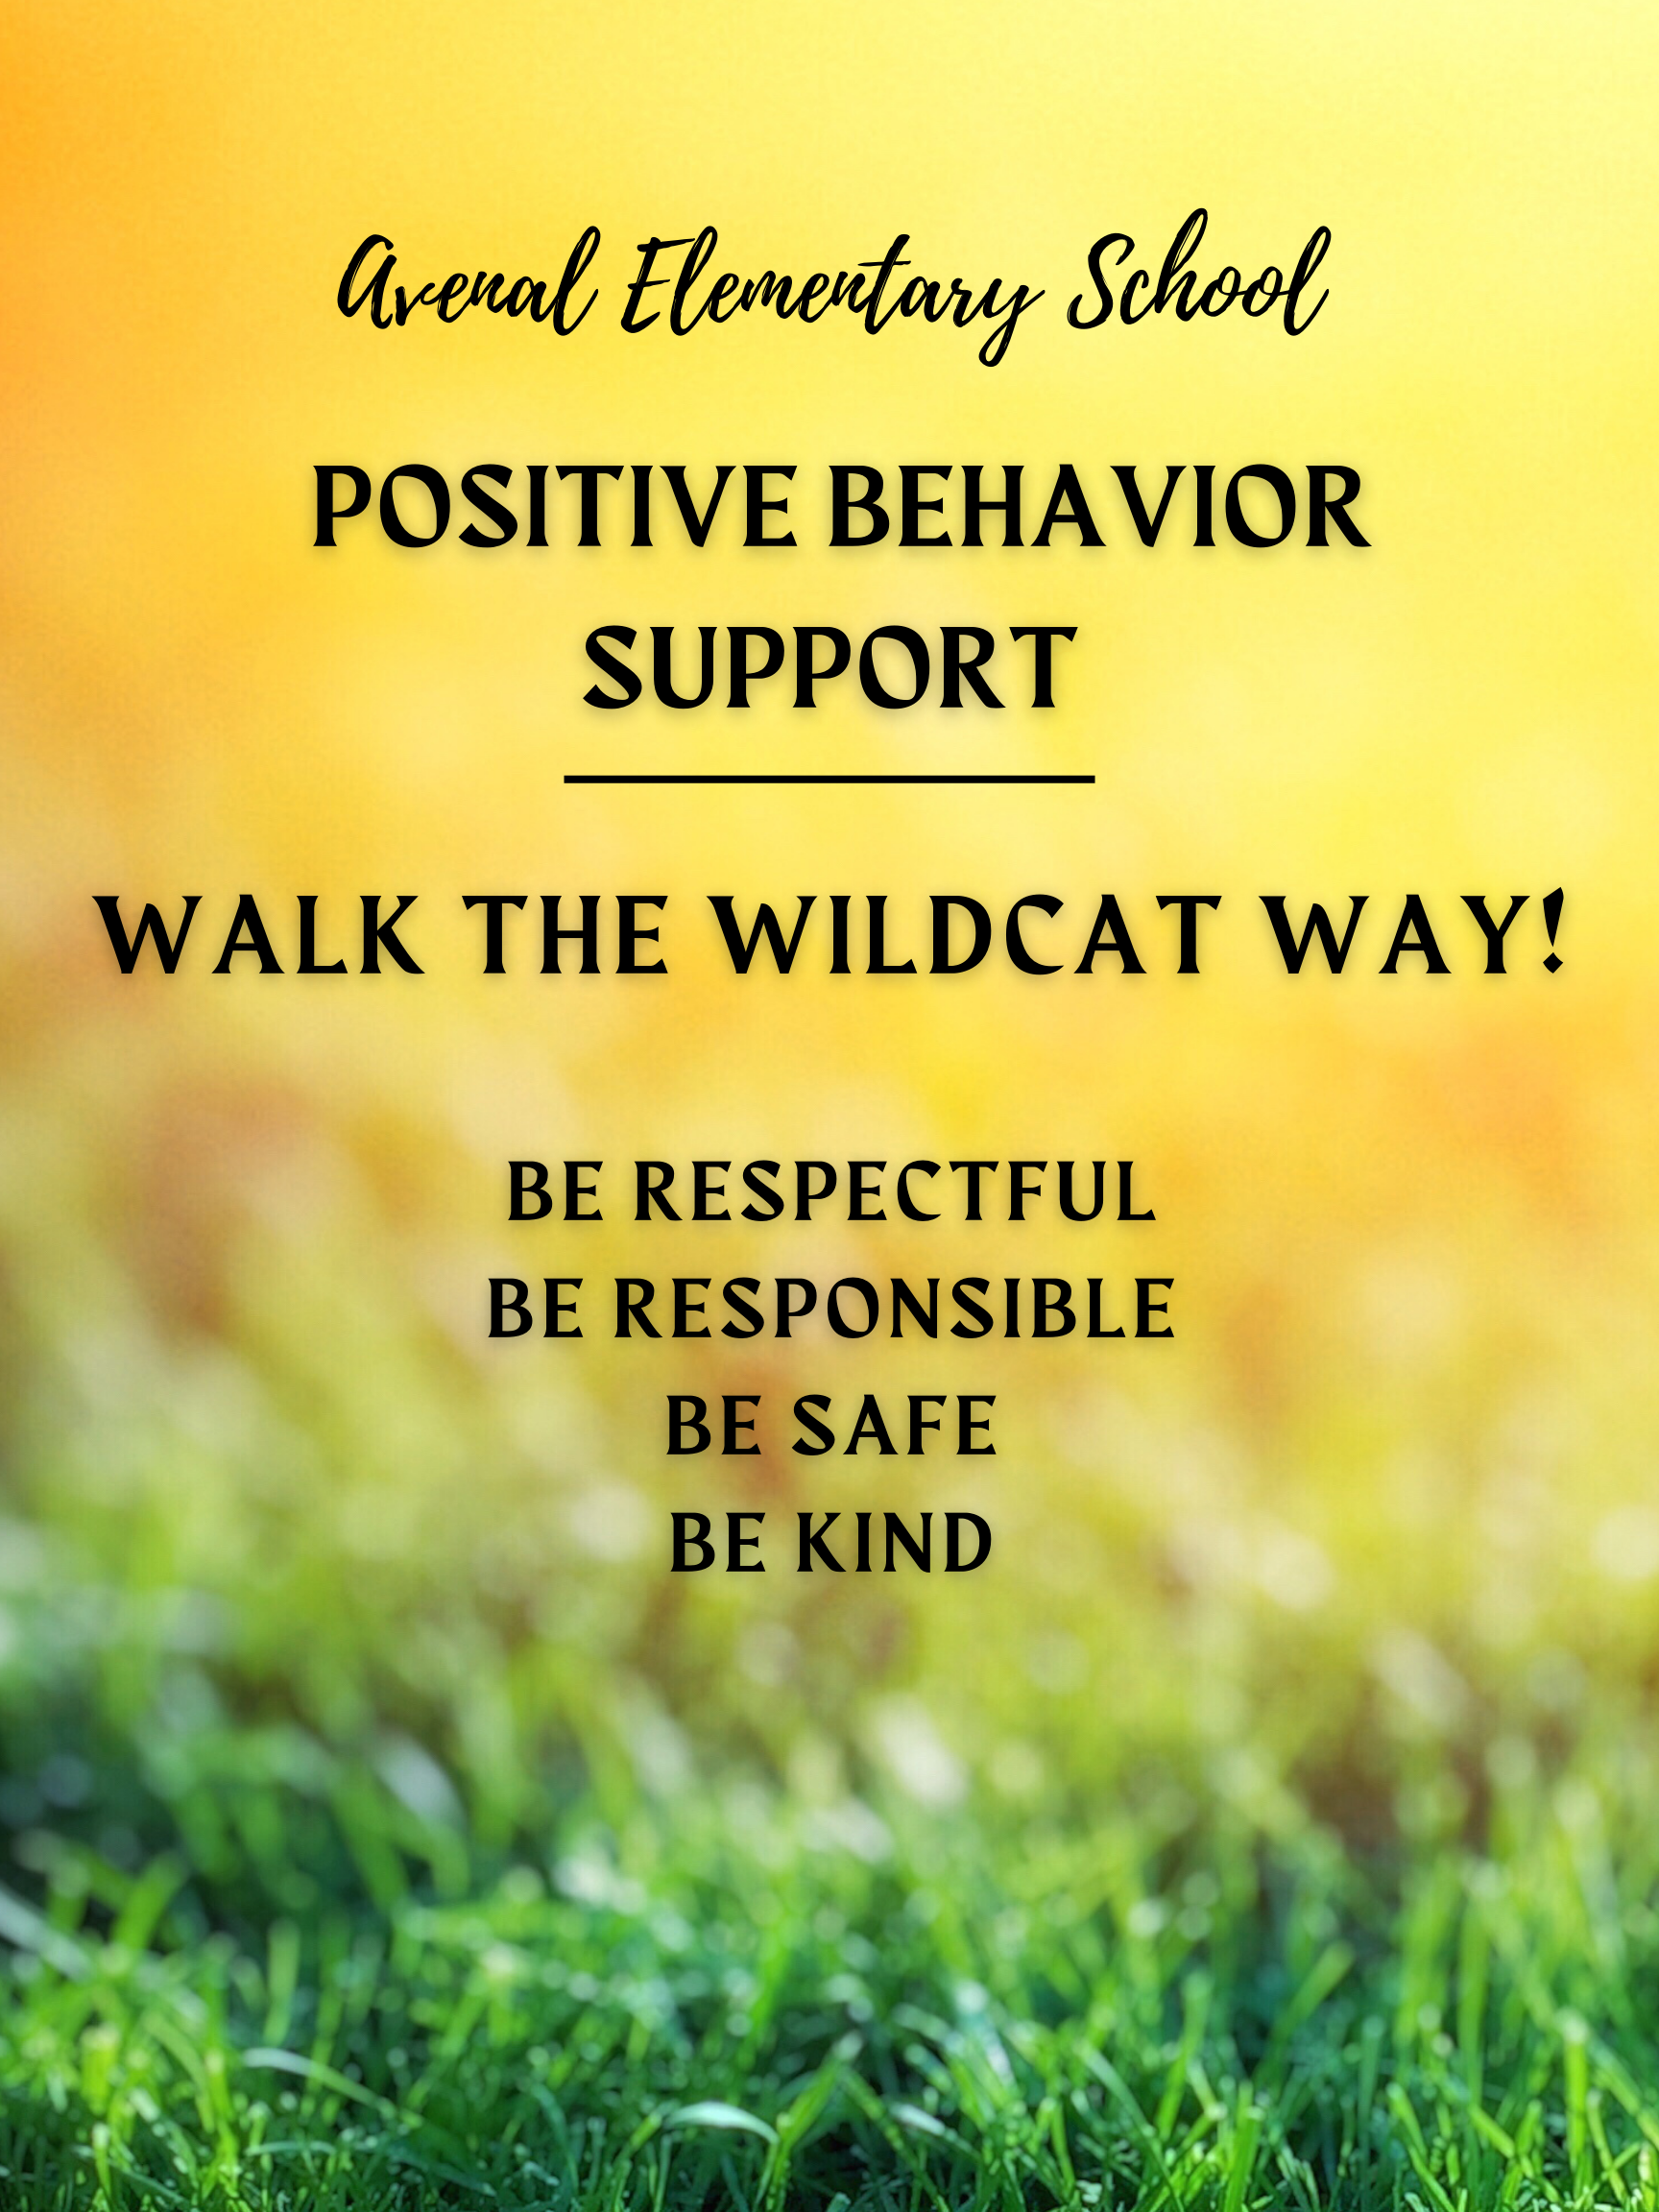 AES Positive Behavior Support 